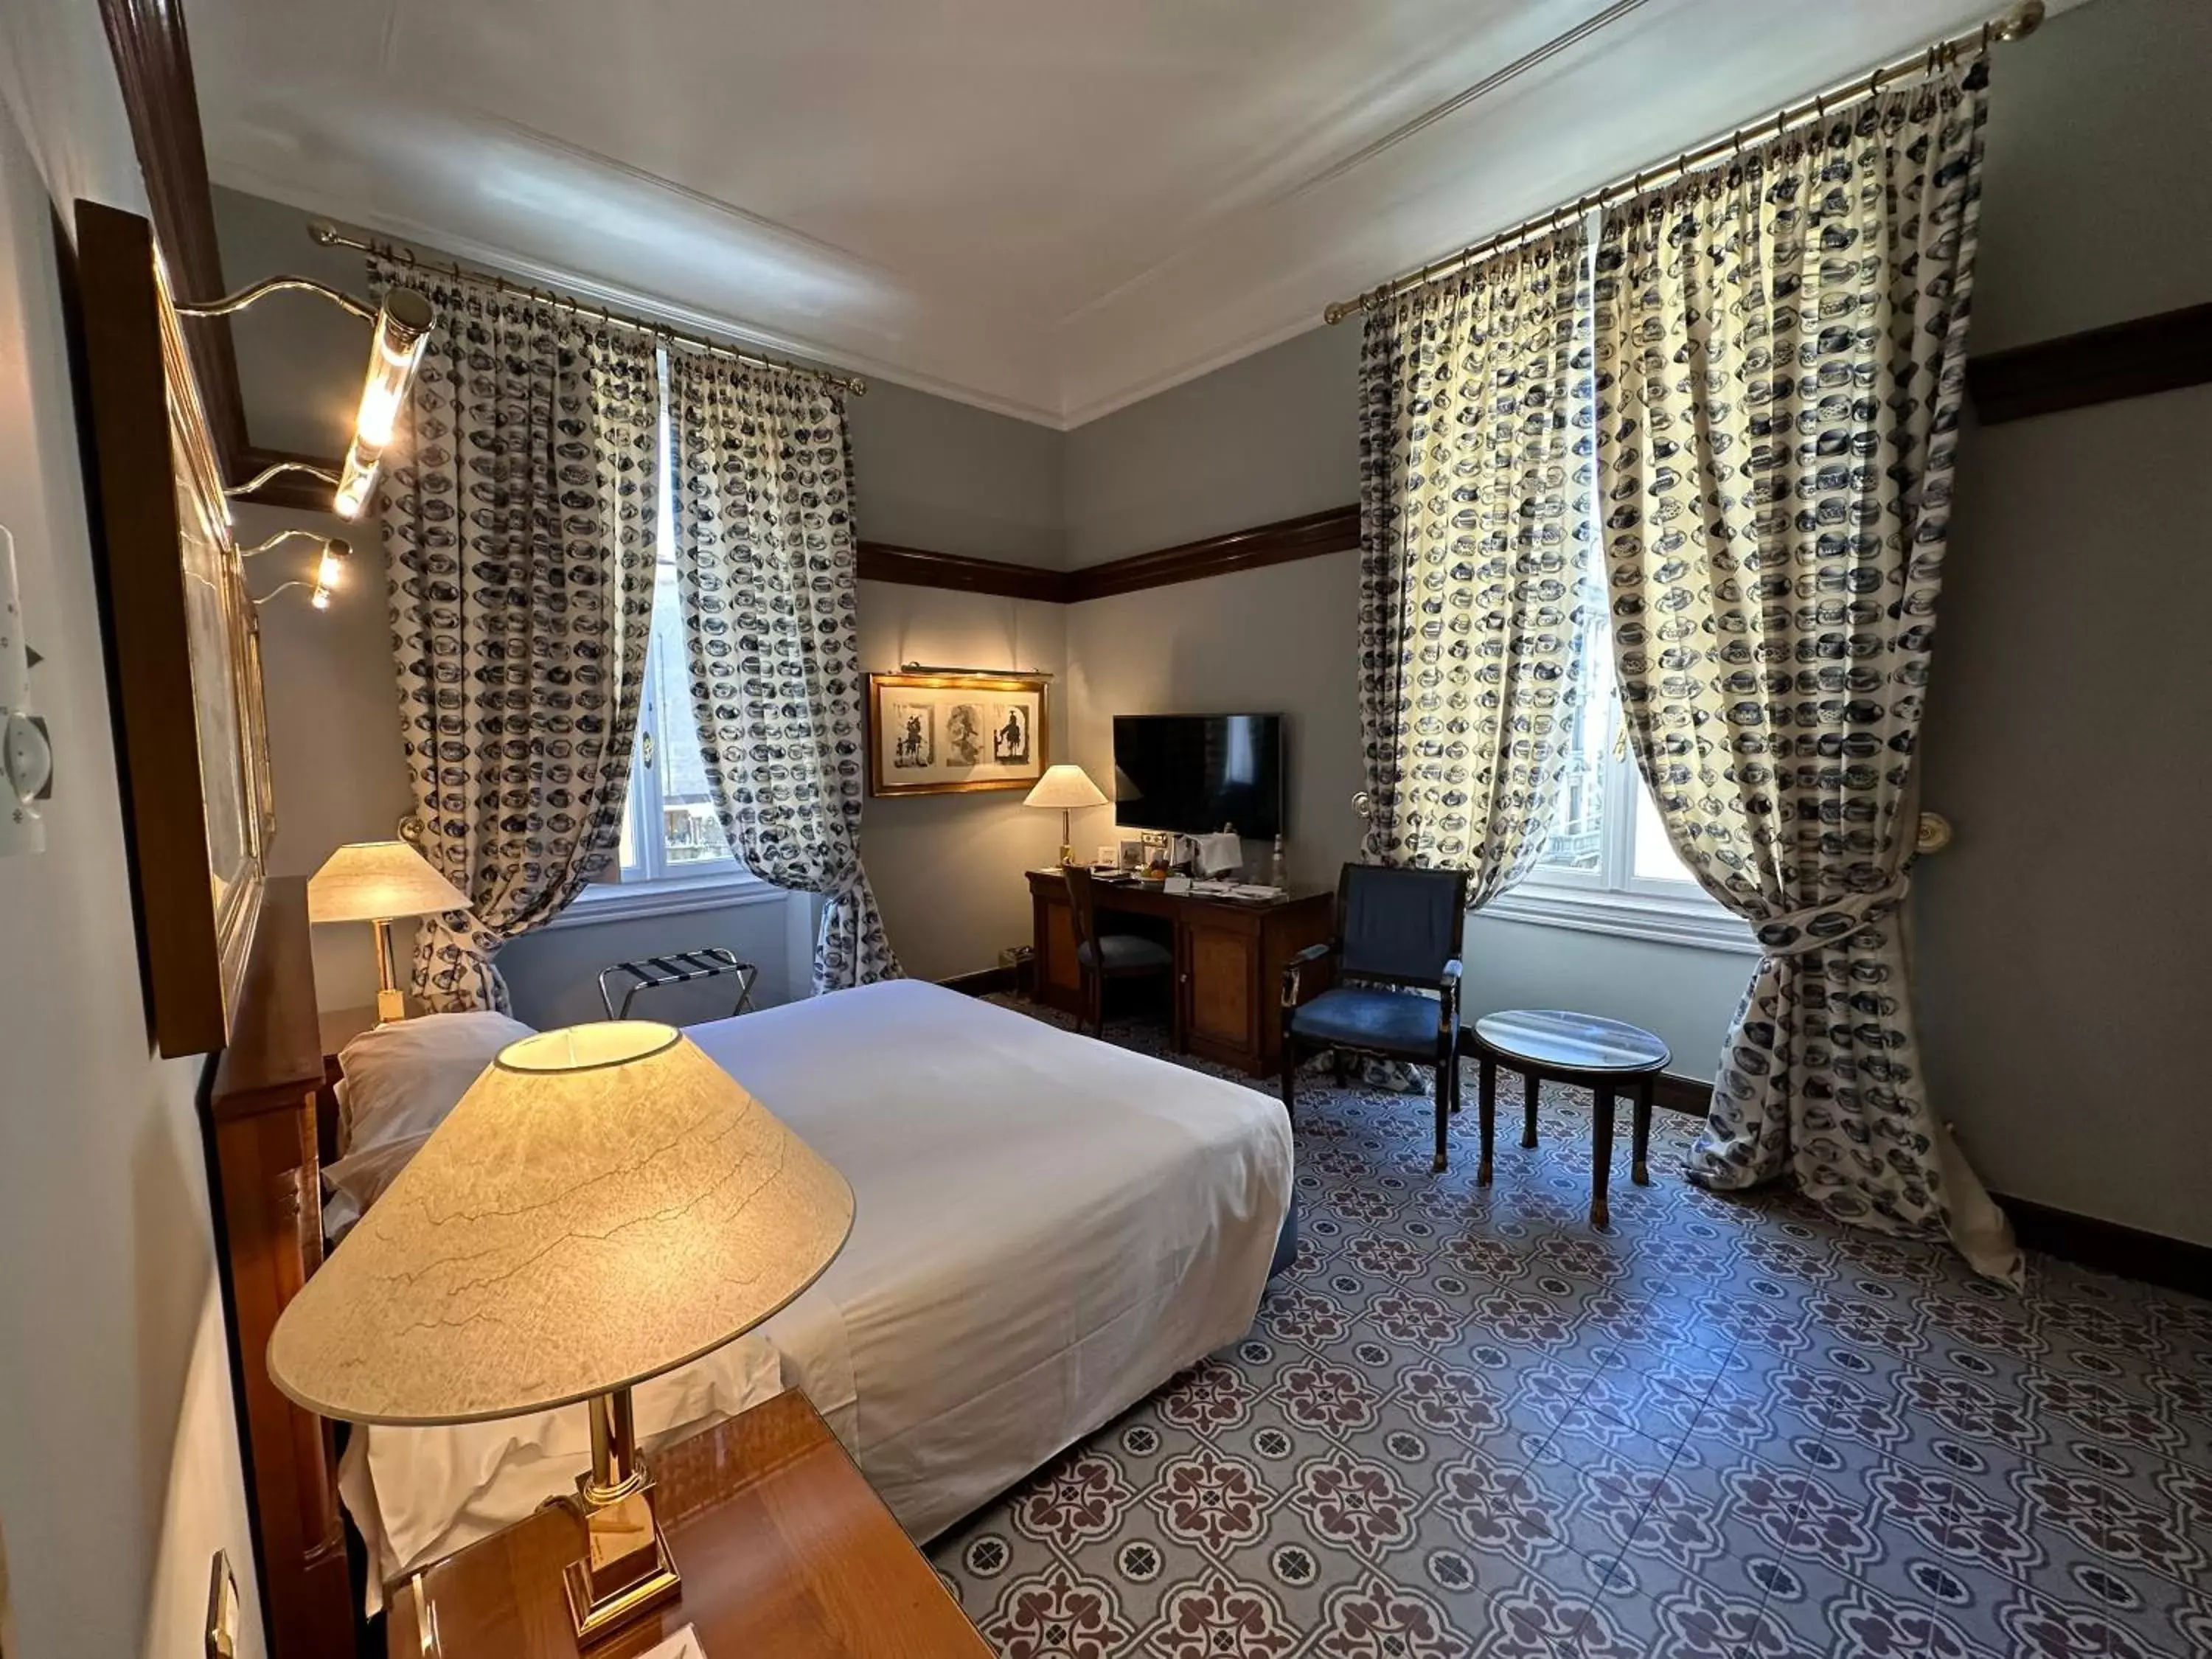 Bedroom in Hotel Albani Firenze